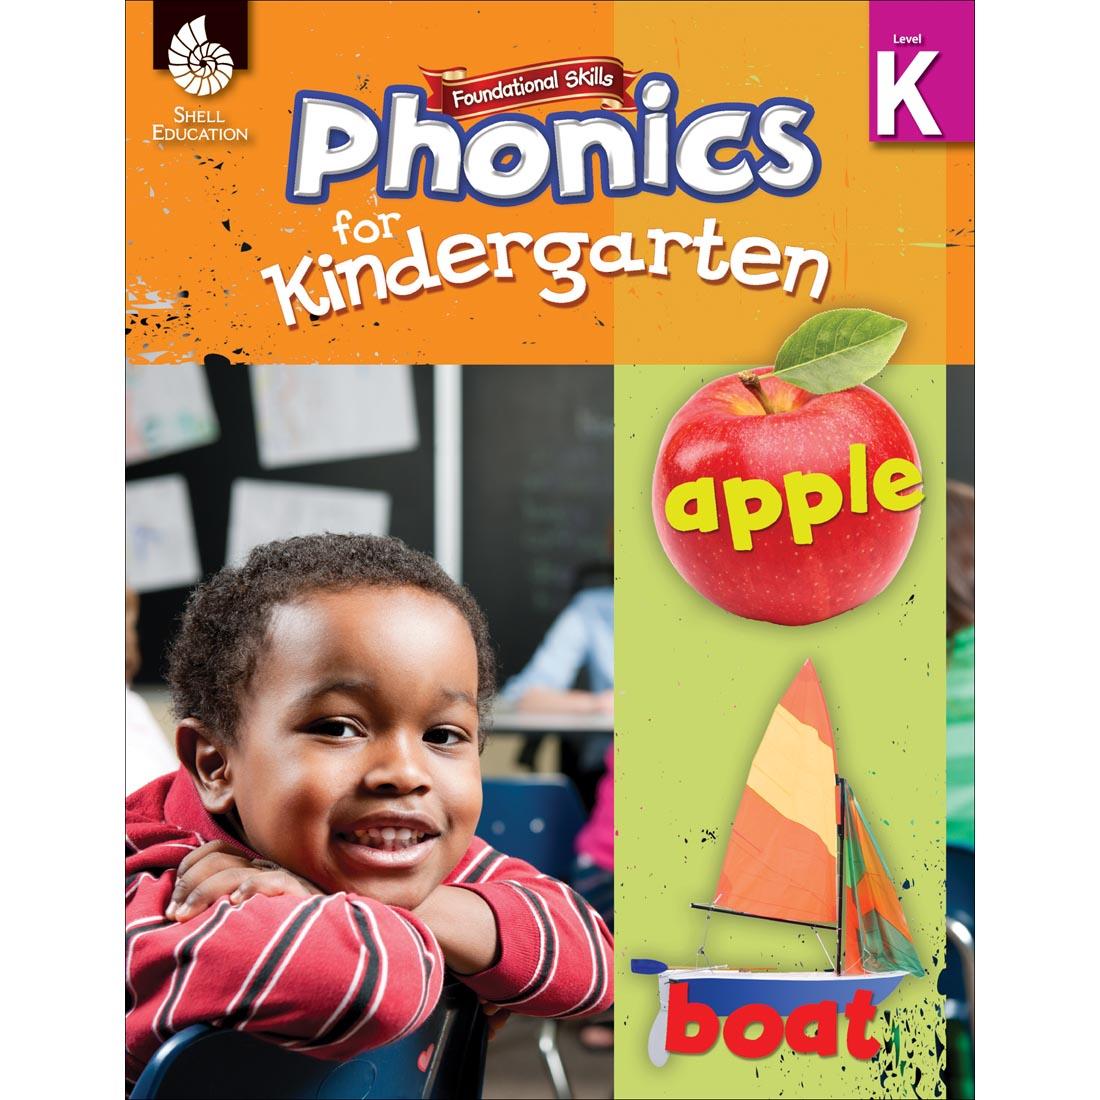 Foundational Skills Book Phonics for Kindergarten